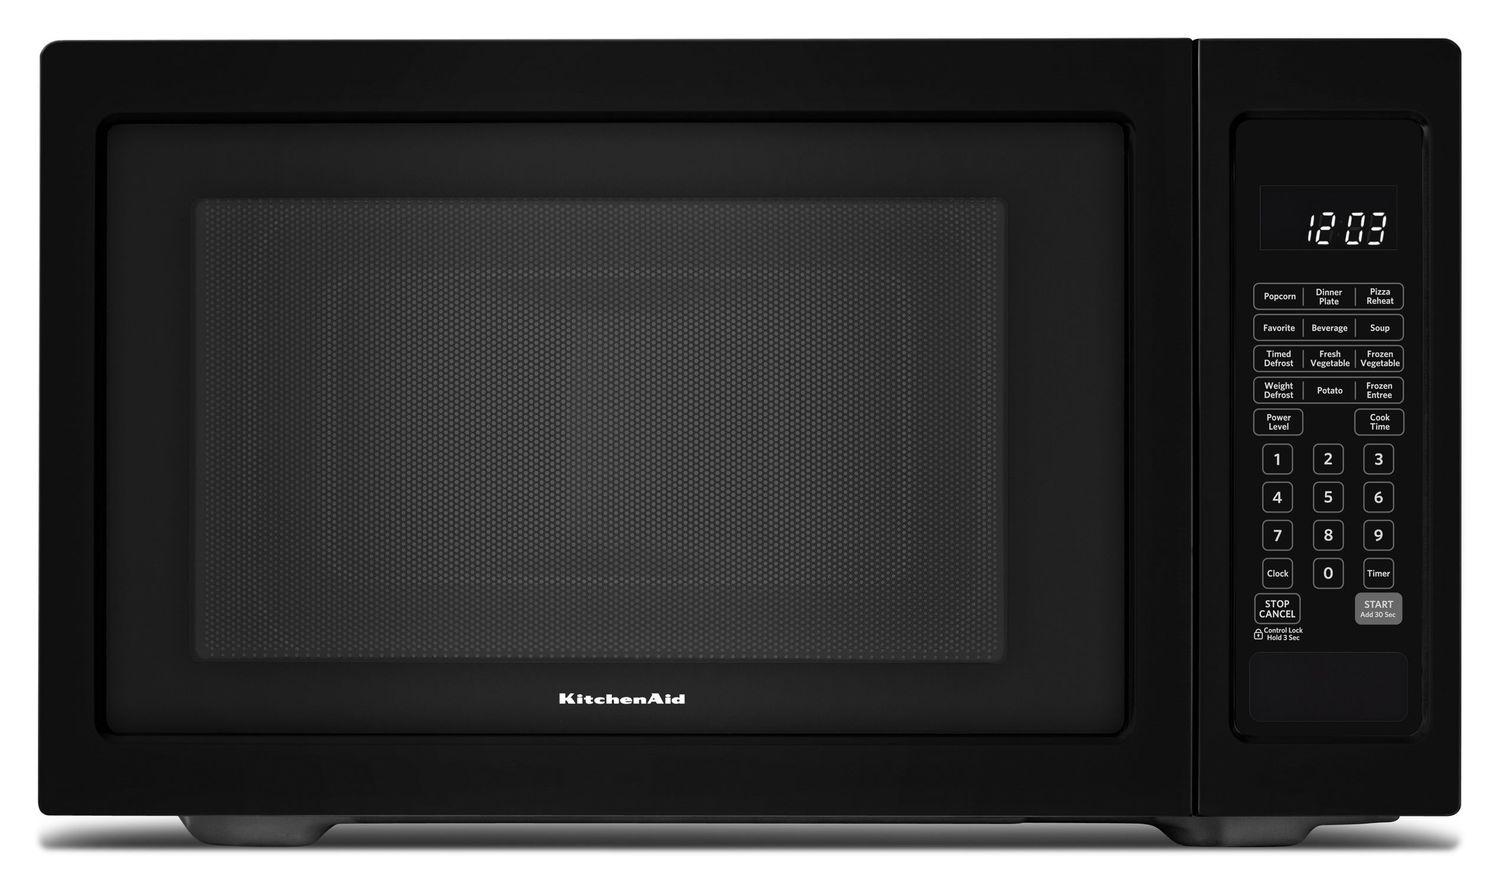 Kitchenaid 21 3/4" Countertop Microwave Oven - 1200 Watt Black